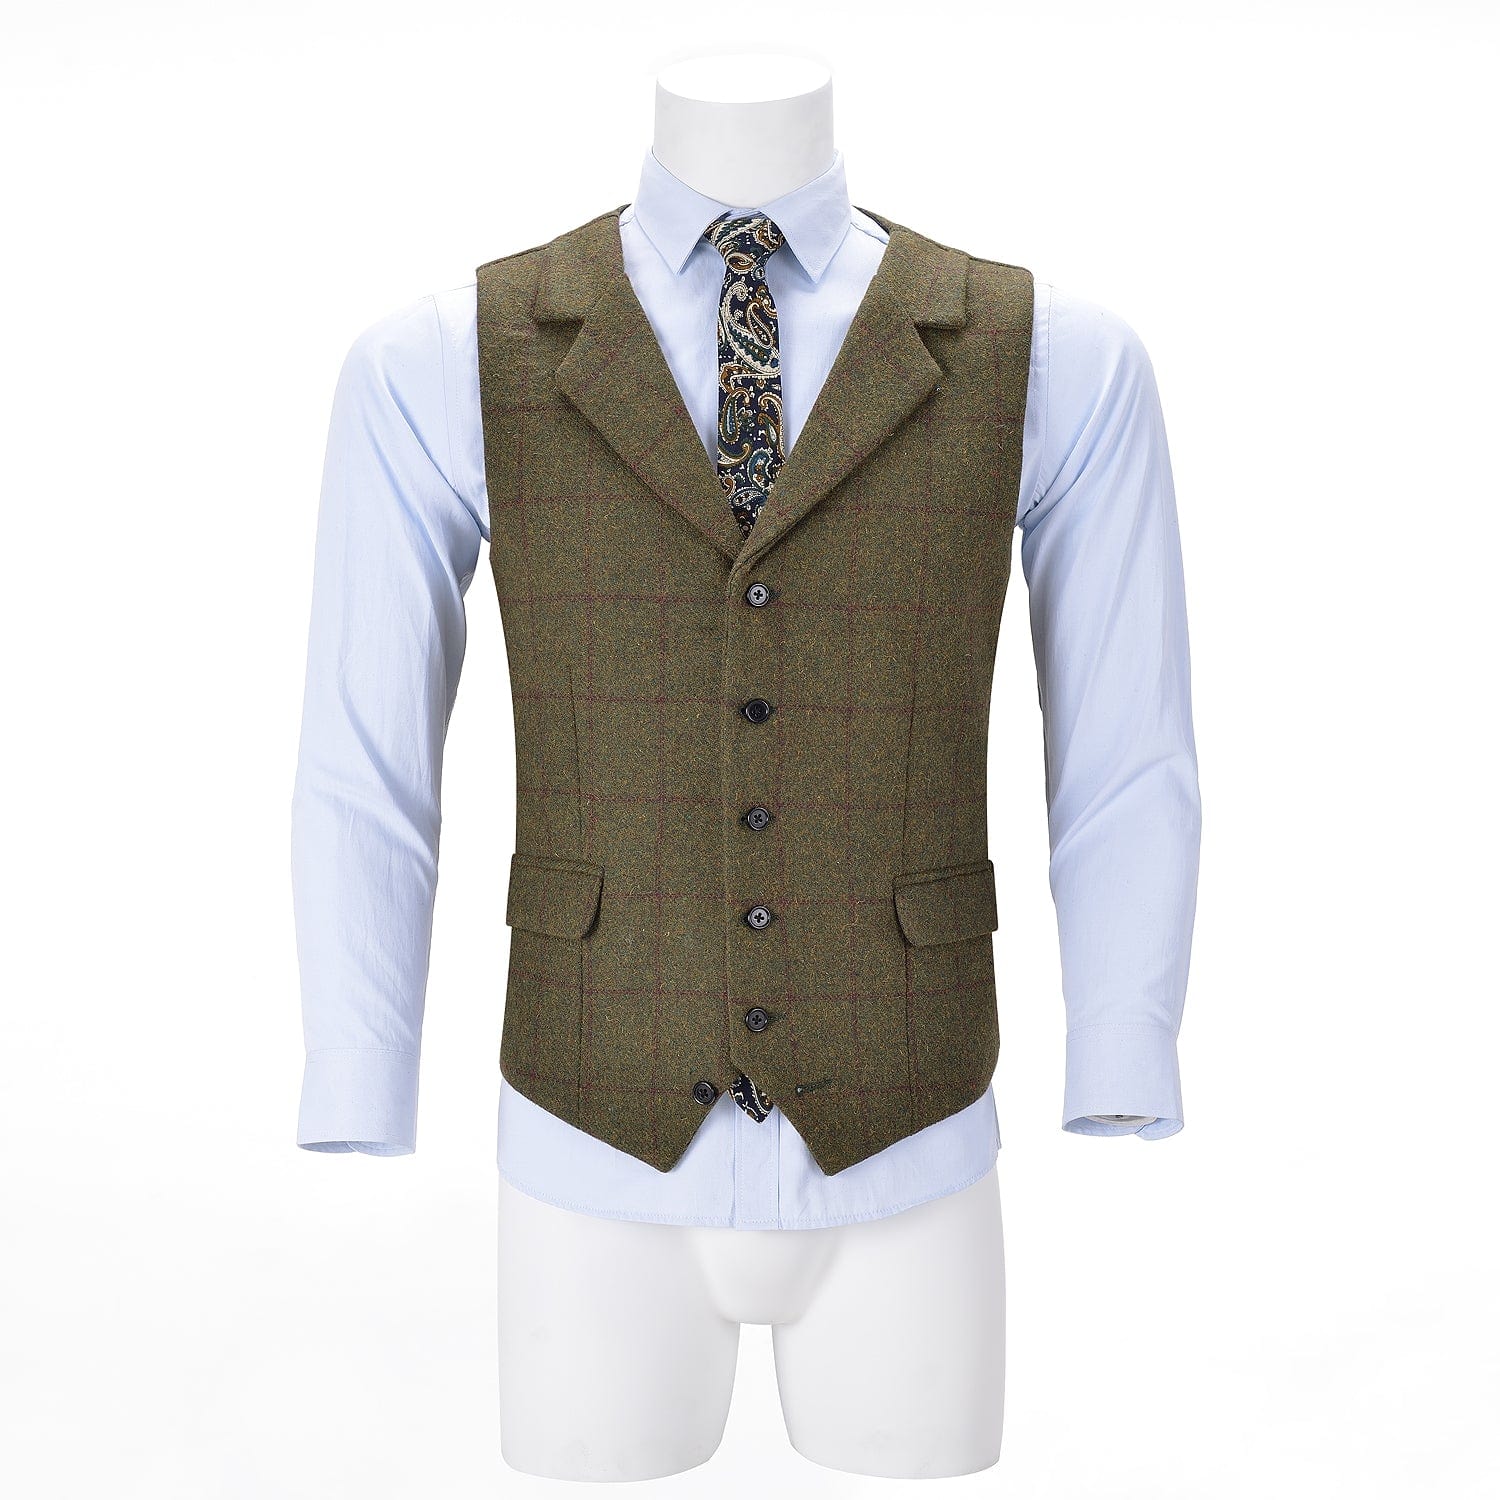 ceehuteey Men's Formal Notch Lapel Suit Vest Tweed Waistcoat